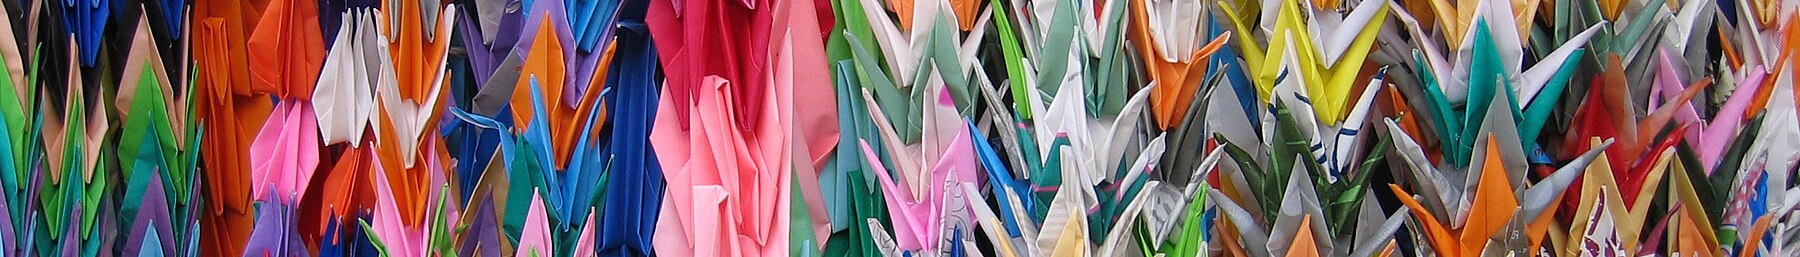 Hiroshiman banneri Origami -nosturit.jpg